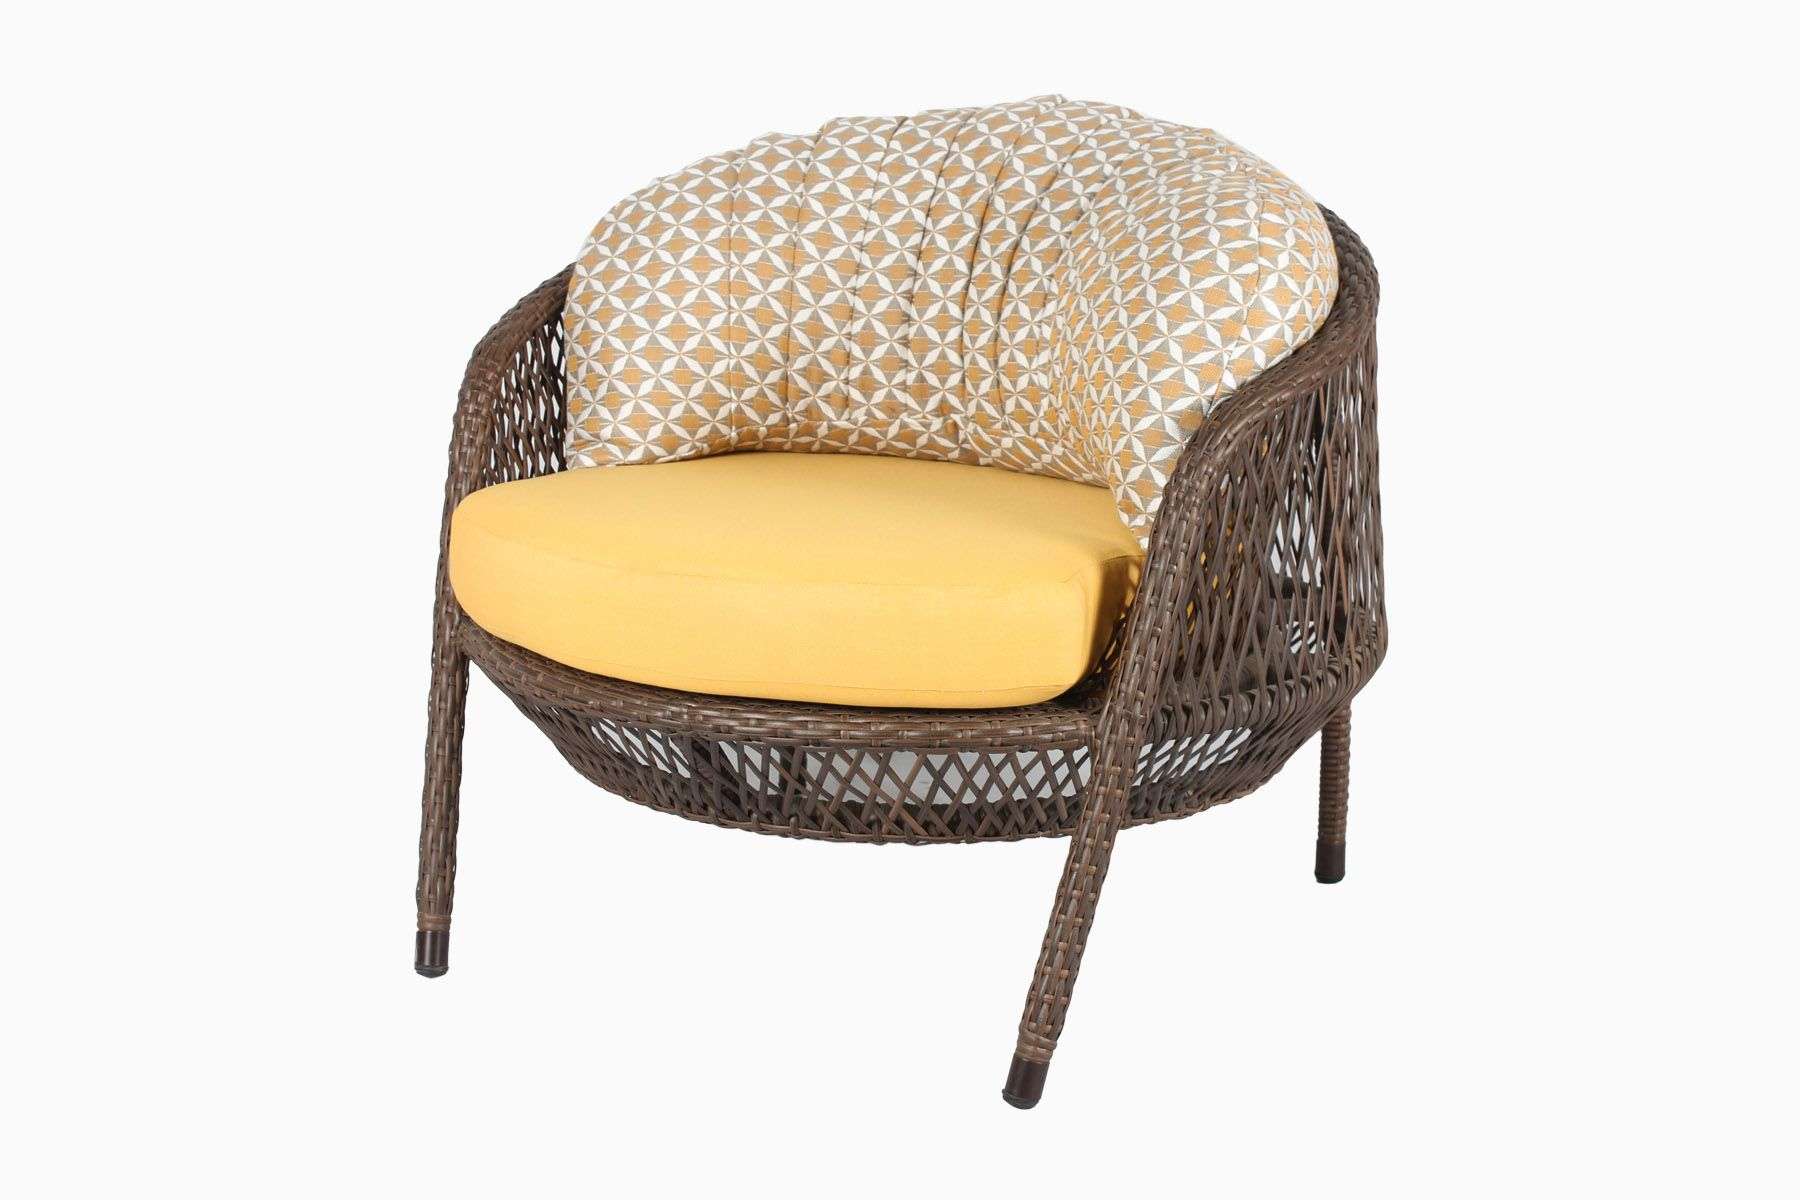 Orto Lounge Chair